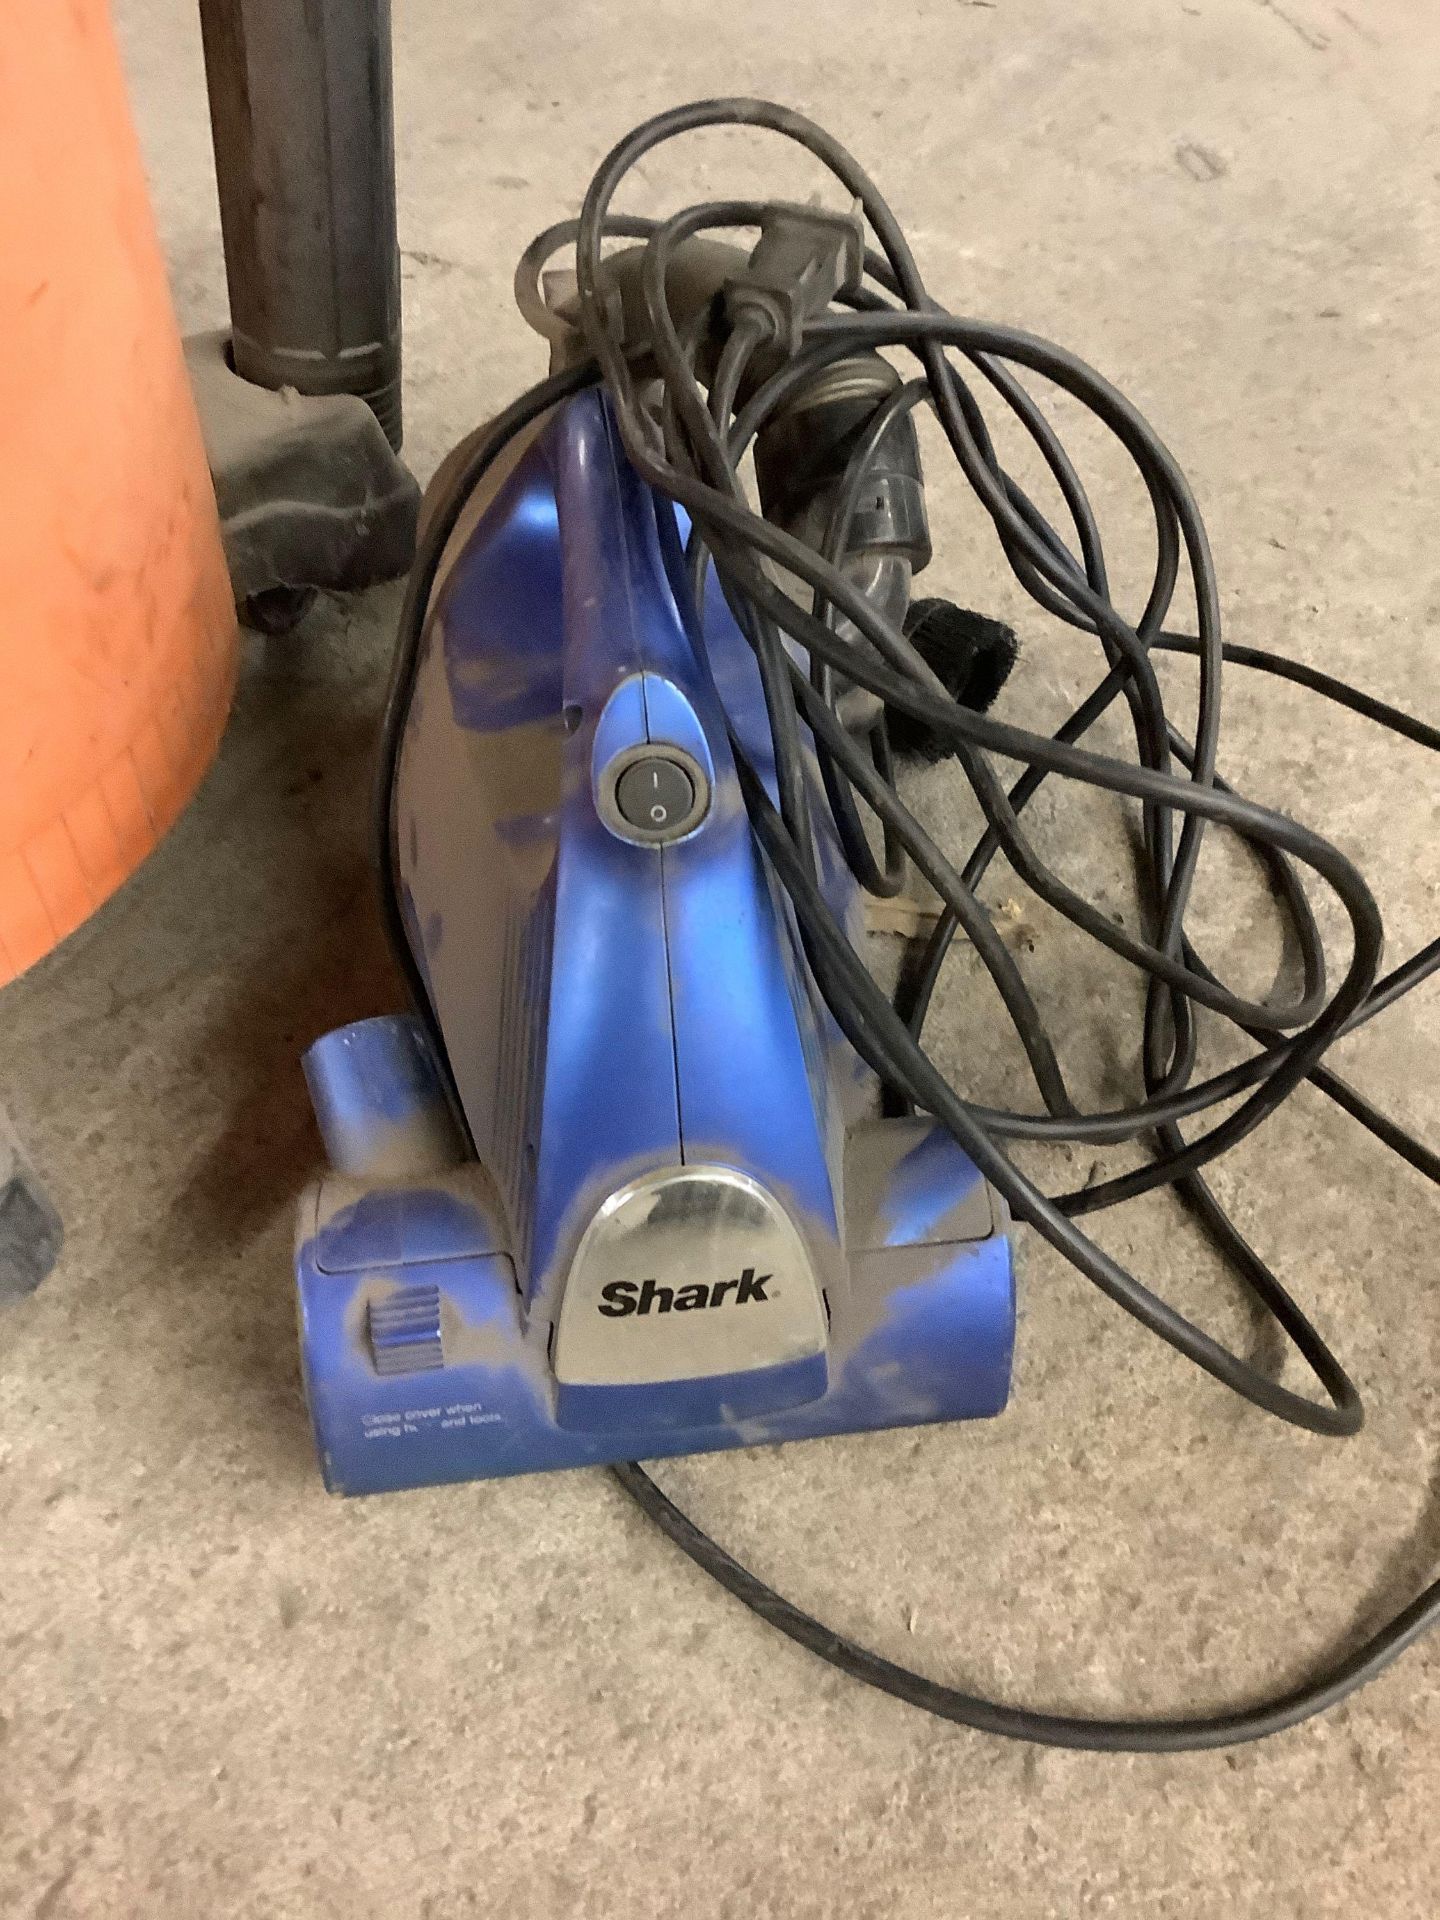 Lot of 2 Vacuums: (1) Ridgid 12 Gallon Wet/Dry Shop Vacuum, (1) Shark, Portable - Image 4 of 4